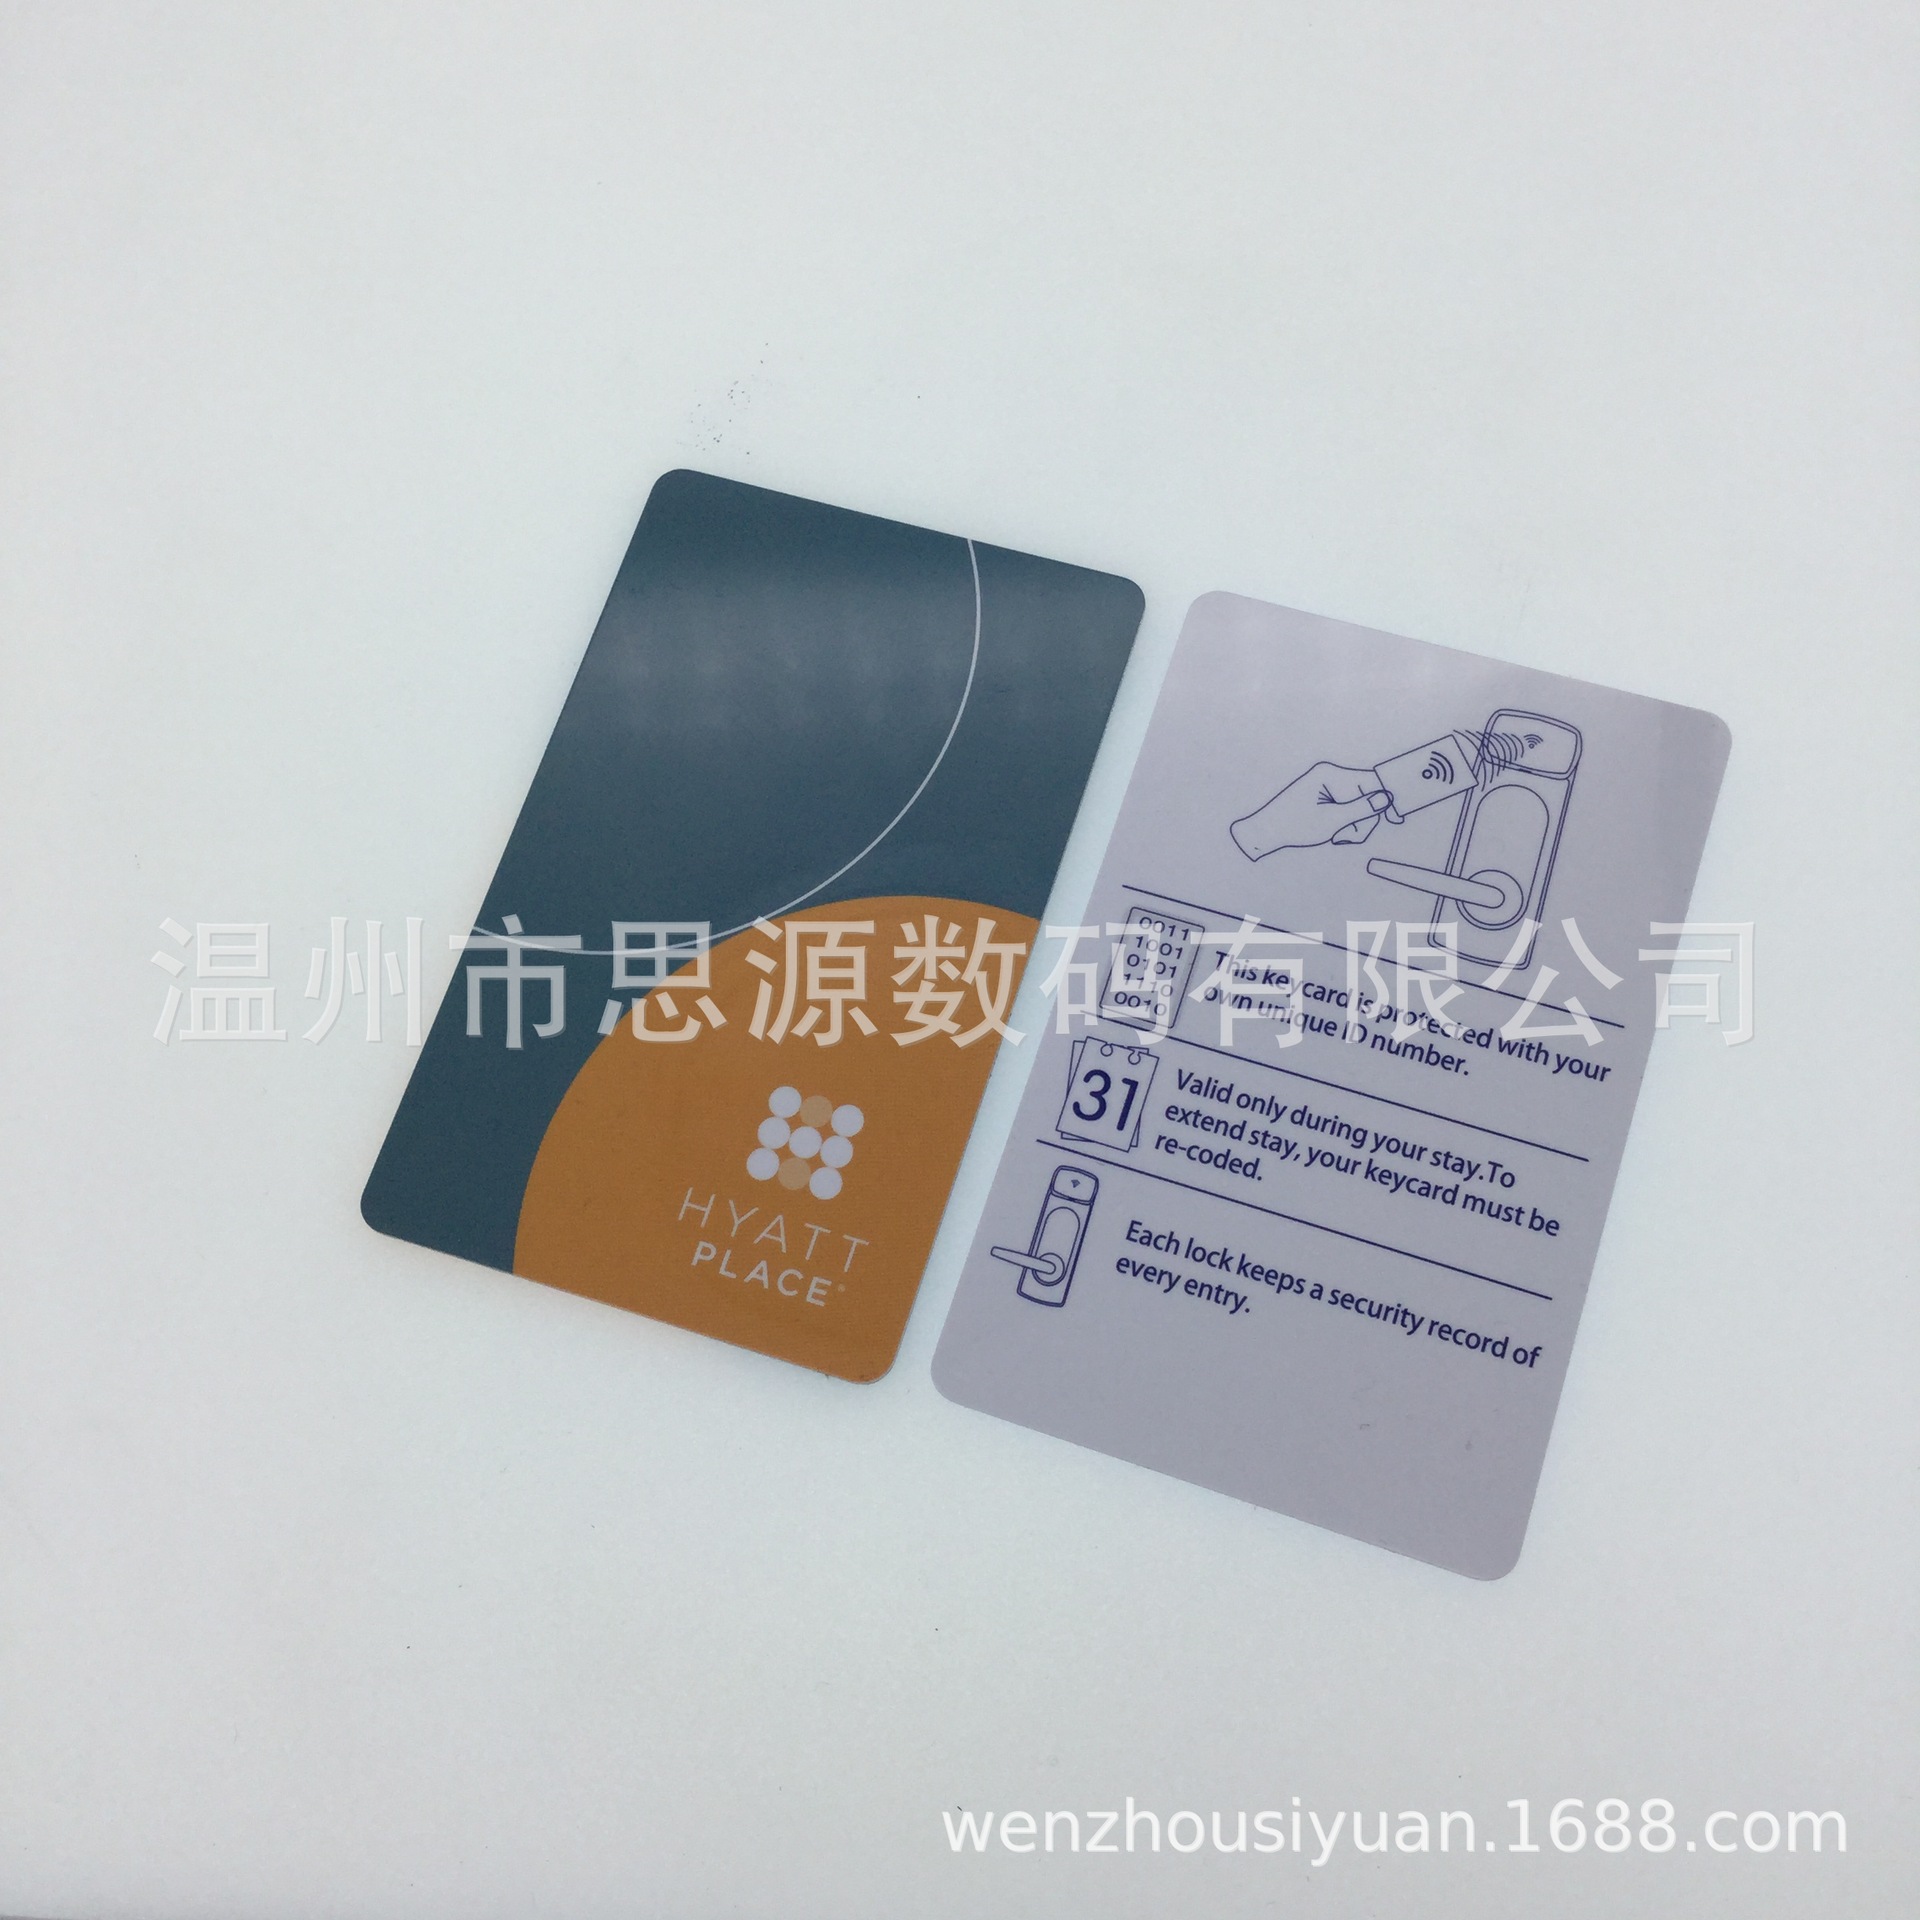 1K M1 IC 芯片卡酒店电子门锁感应房卡ving card系统加密卡